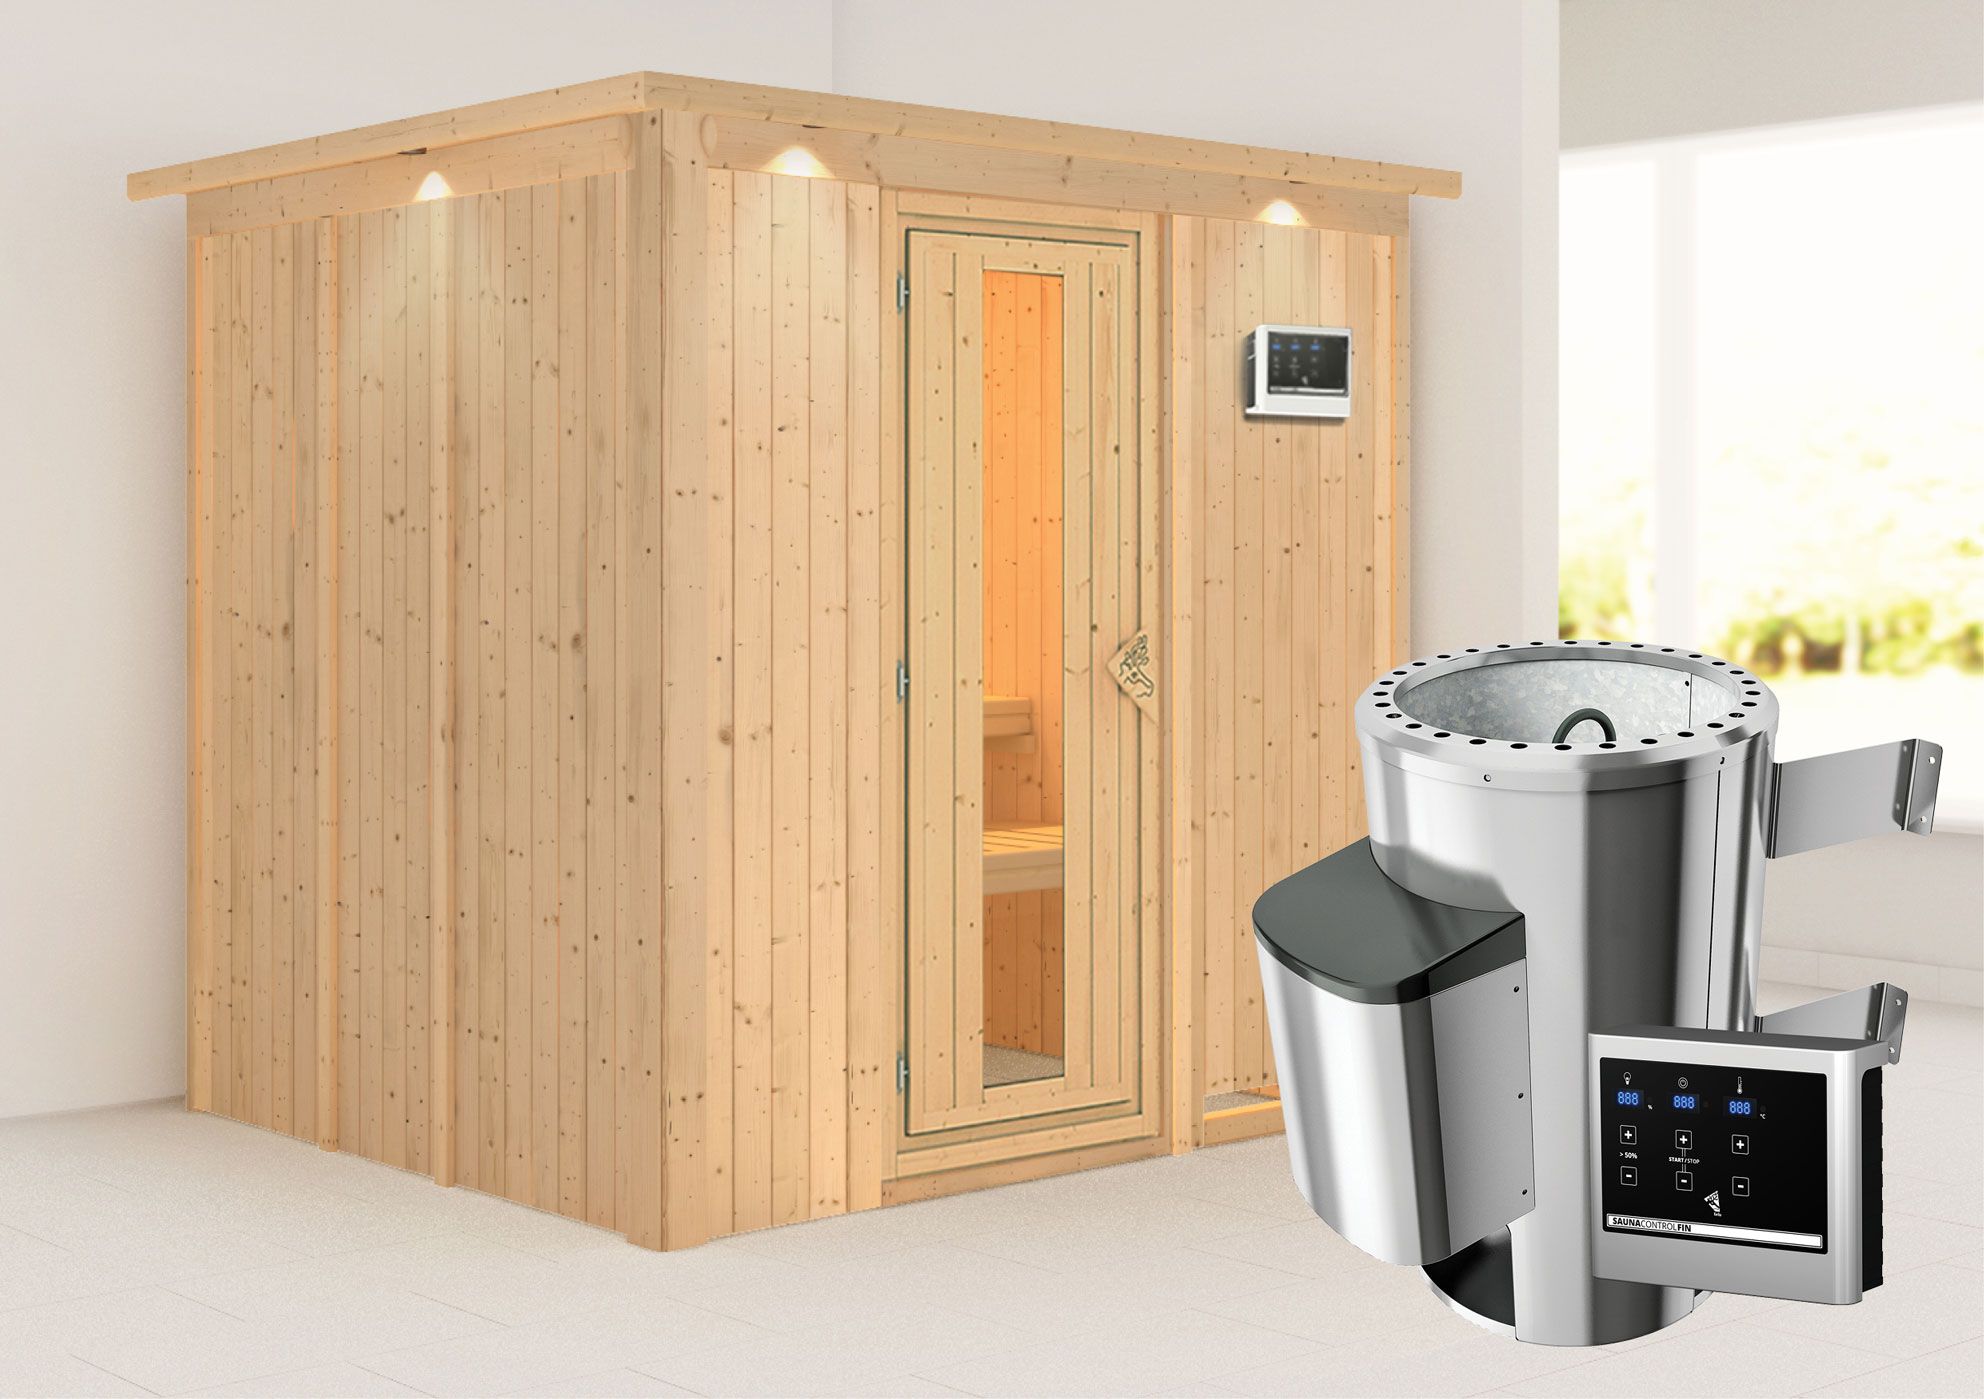 Sauna "Agnar" SET met energiebesparende deur en kroon - kleur: natuur, kachel externe regeling eenvoudig 3,6 kW - 210 x 184 x 202 cm (B x D x H)